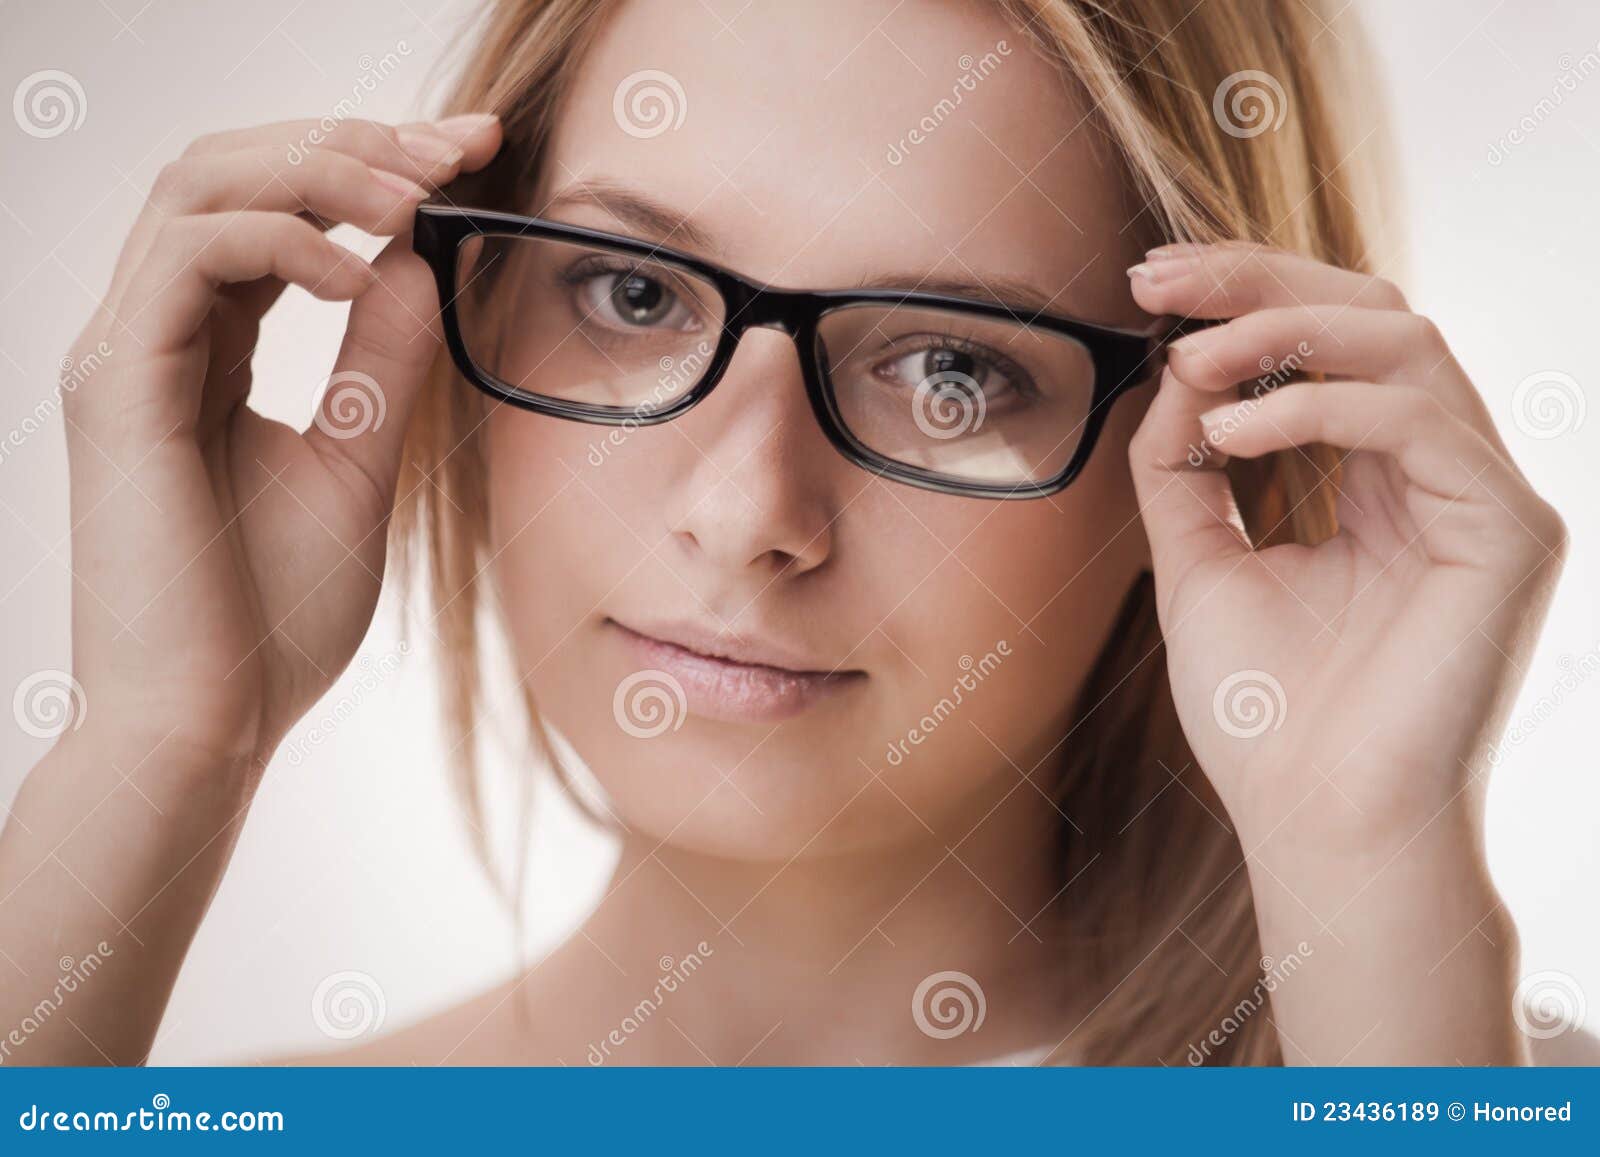 Cute Girl Wearing Glasses Stock Image Image Of Short